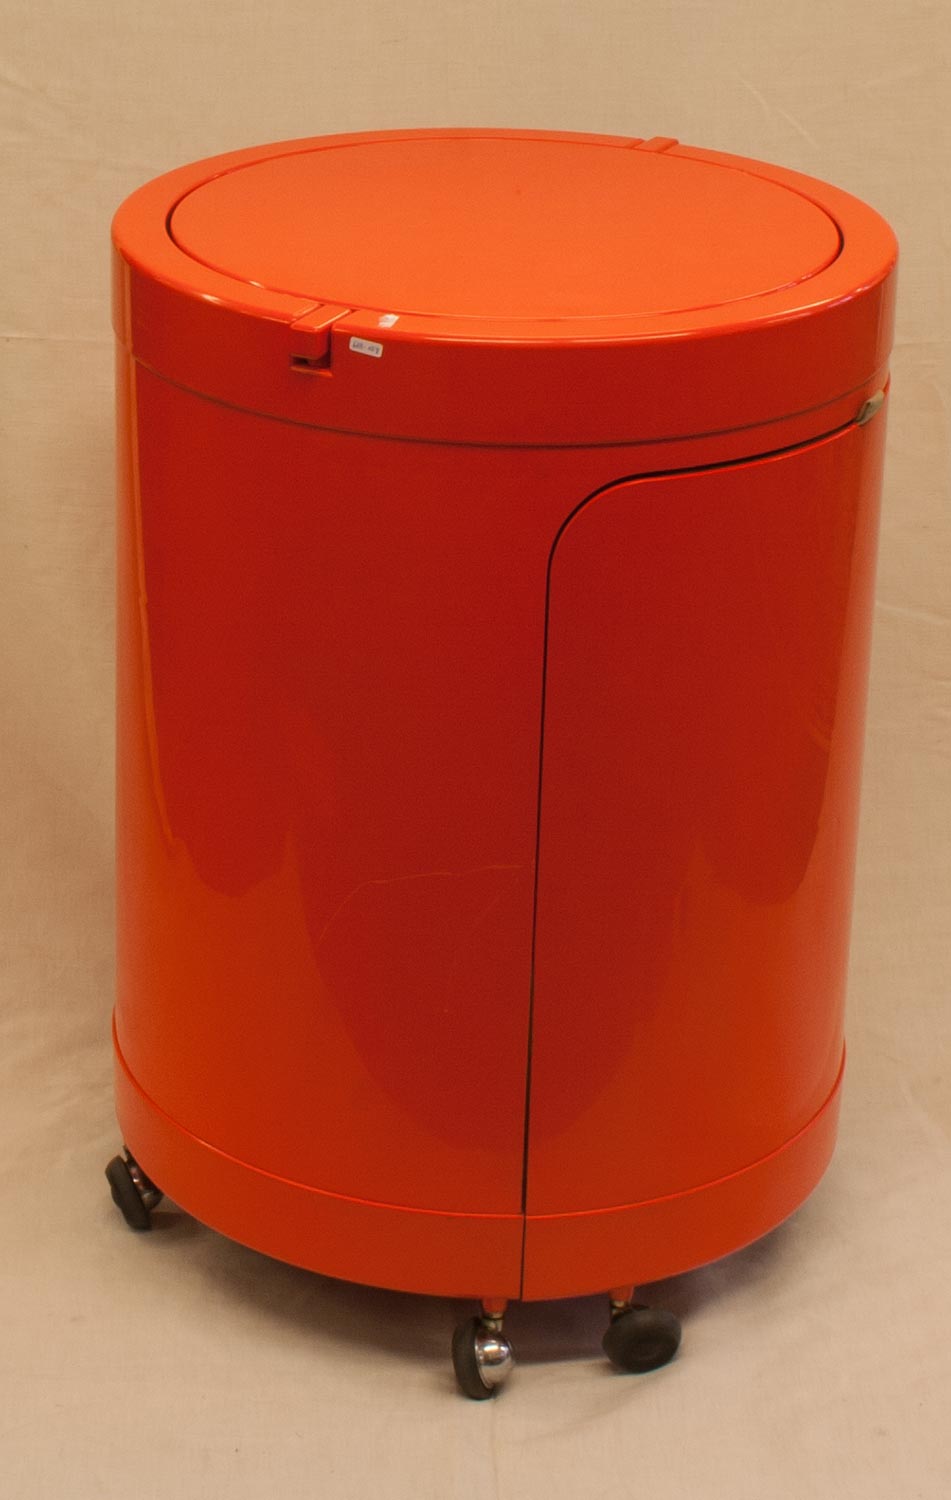 FrisierkommodeItalien, Industriedesign um 1970er Jahre, orangefarbener Kunststoff, tonnenförmig, - Image 2 of 2